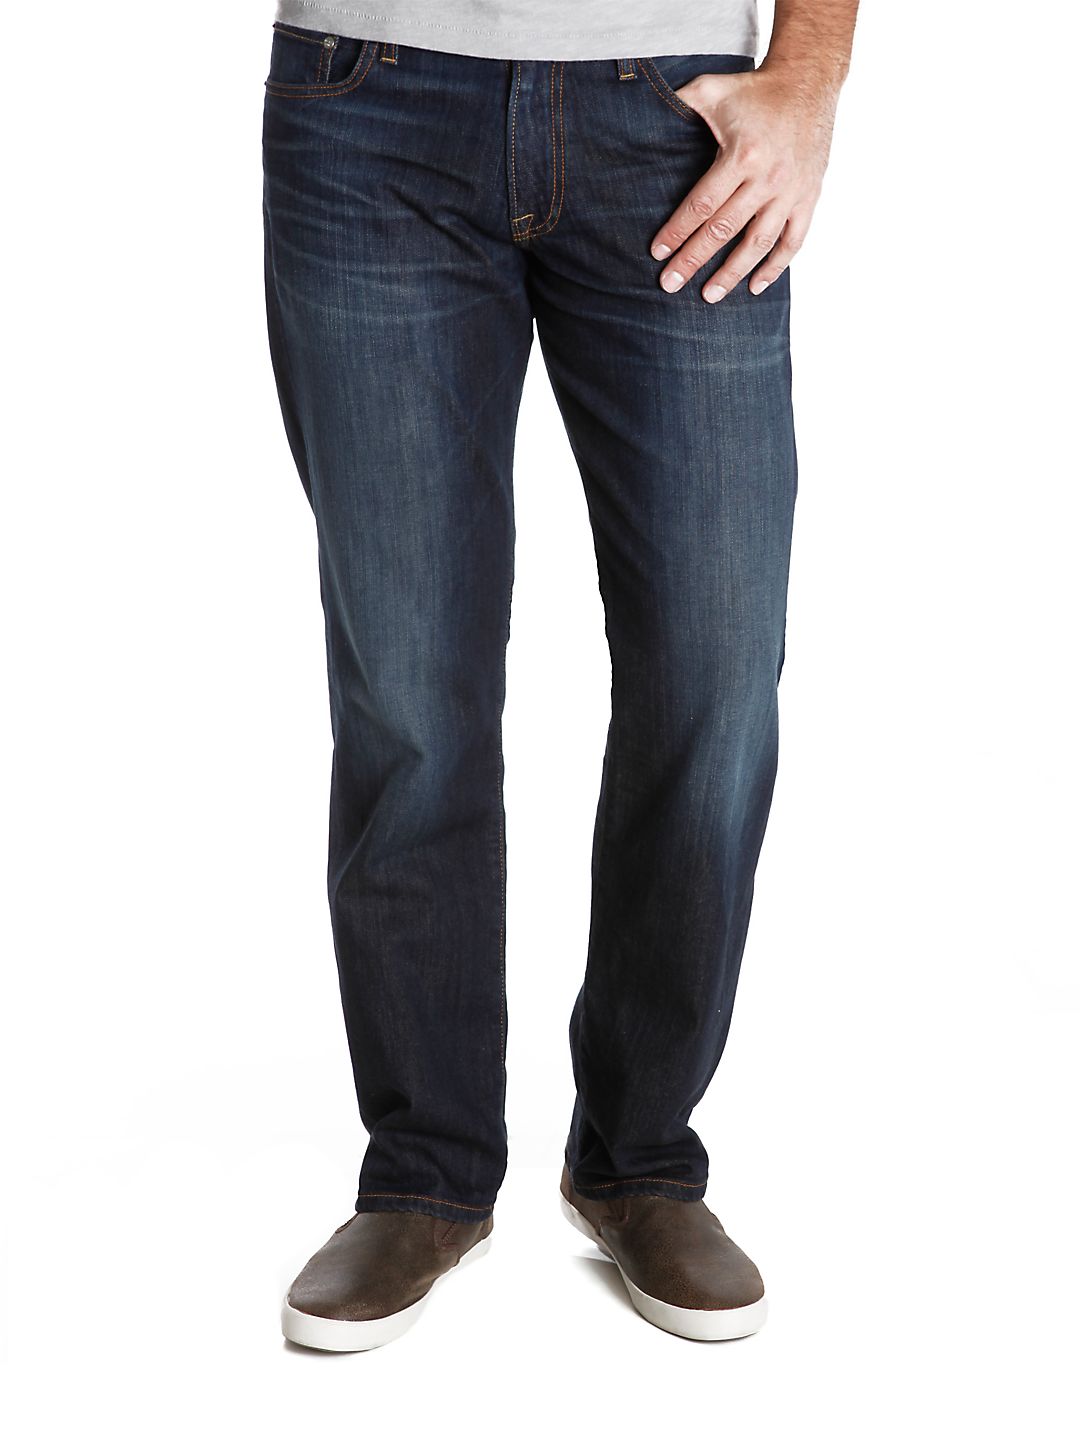 221 Original Straight Barite Wash Jeans - image 1 of 2